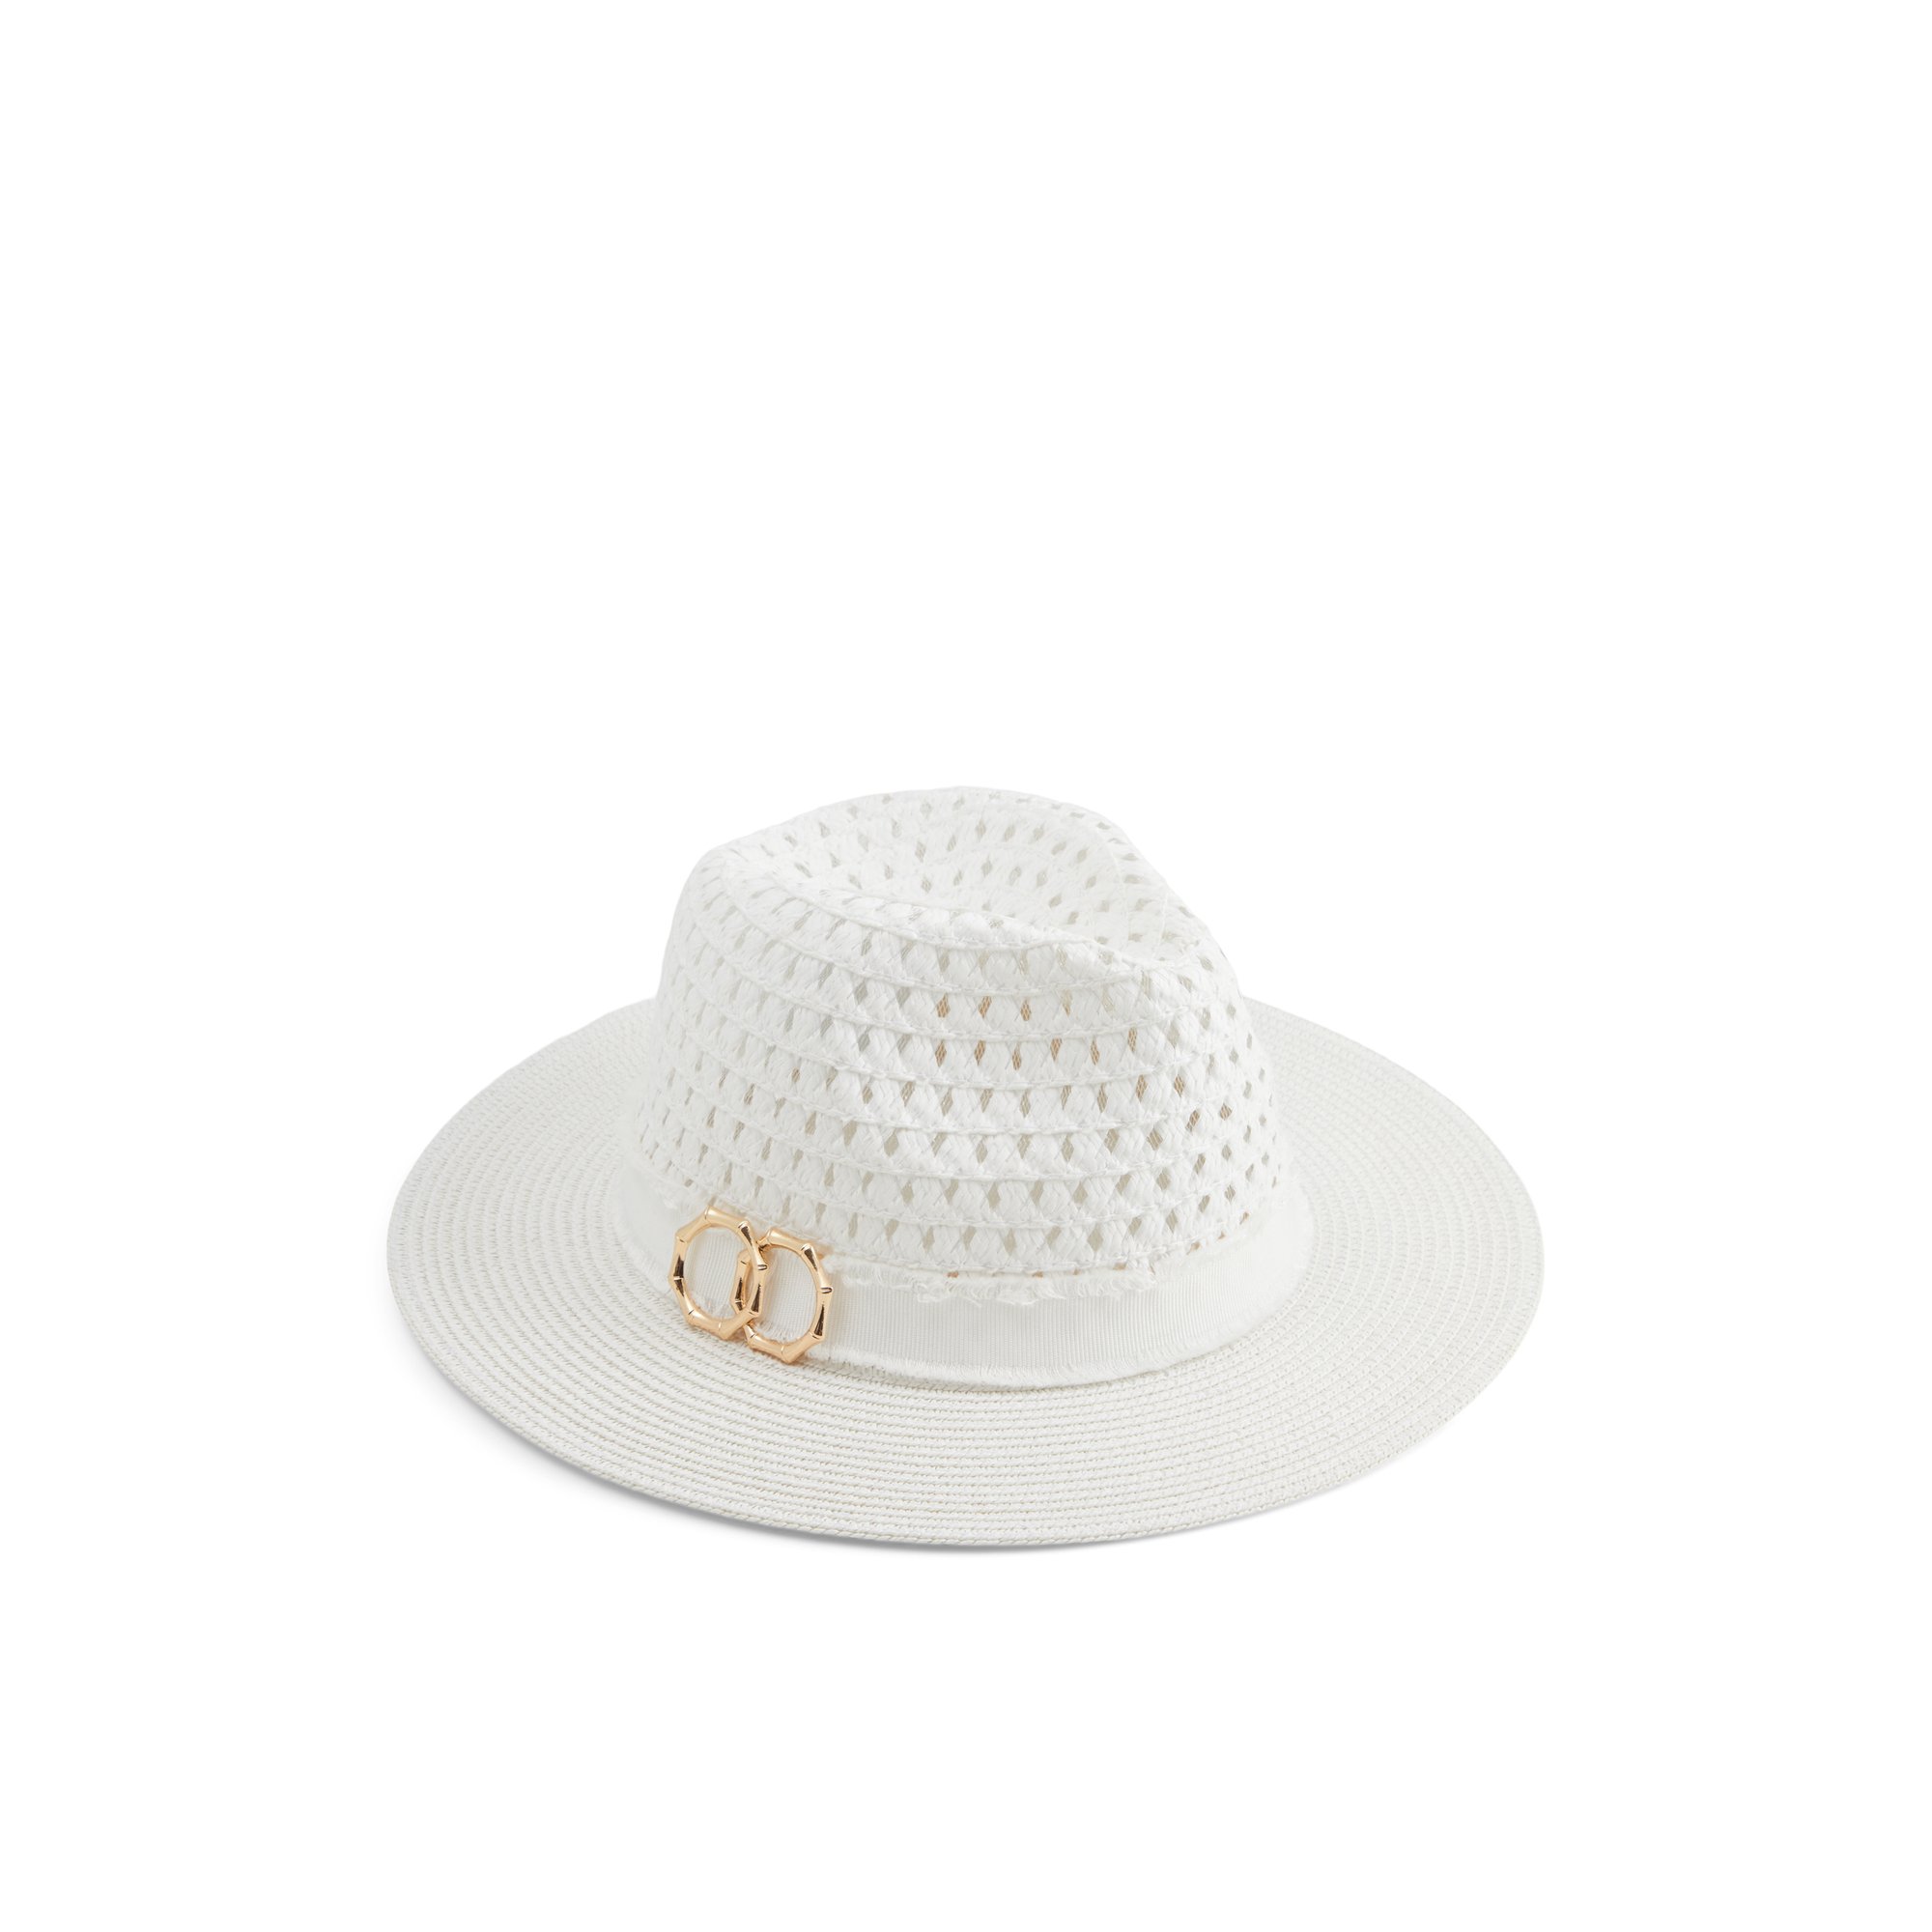 Image of ALDO Daraldar - Women's Hat Hats, Gloves & Scarve - White, Size S/M